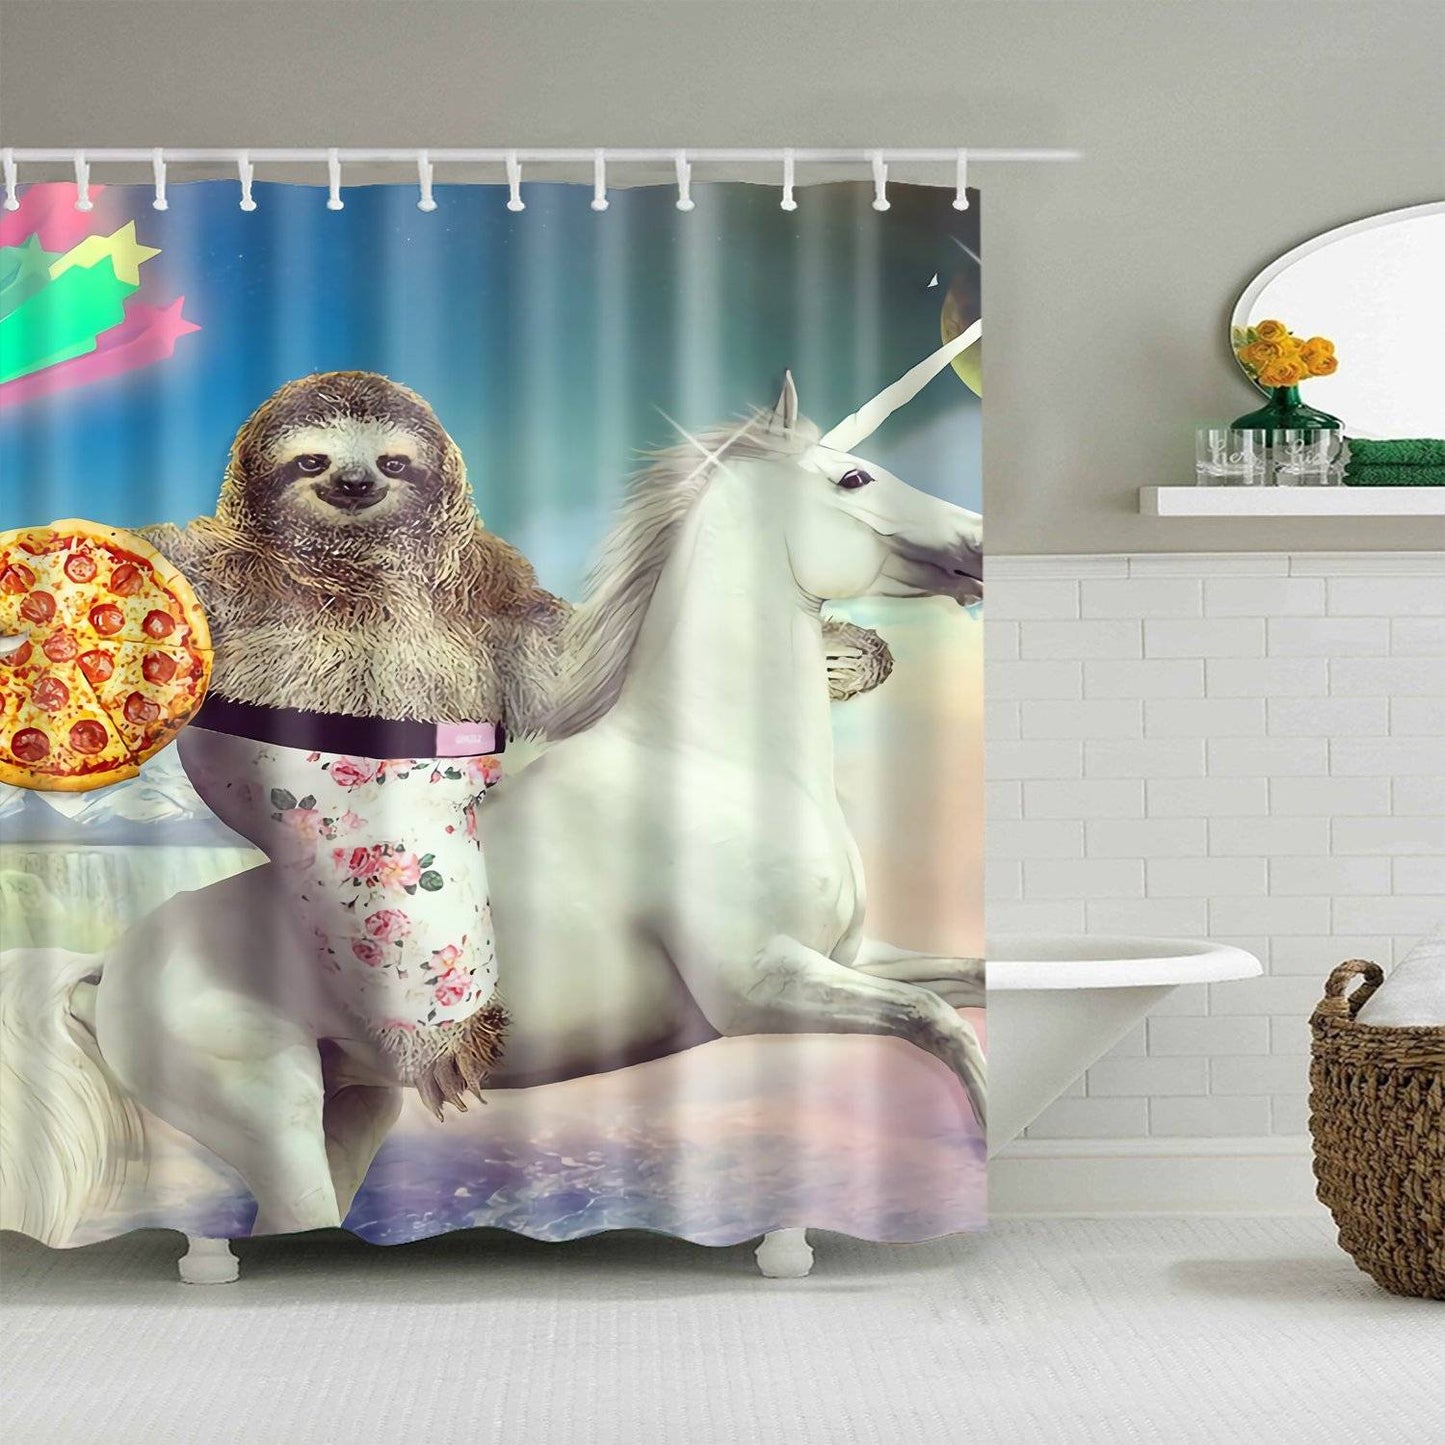 Knight Catfish with Pizza Sloth Riding Unicorn Shower Curtain